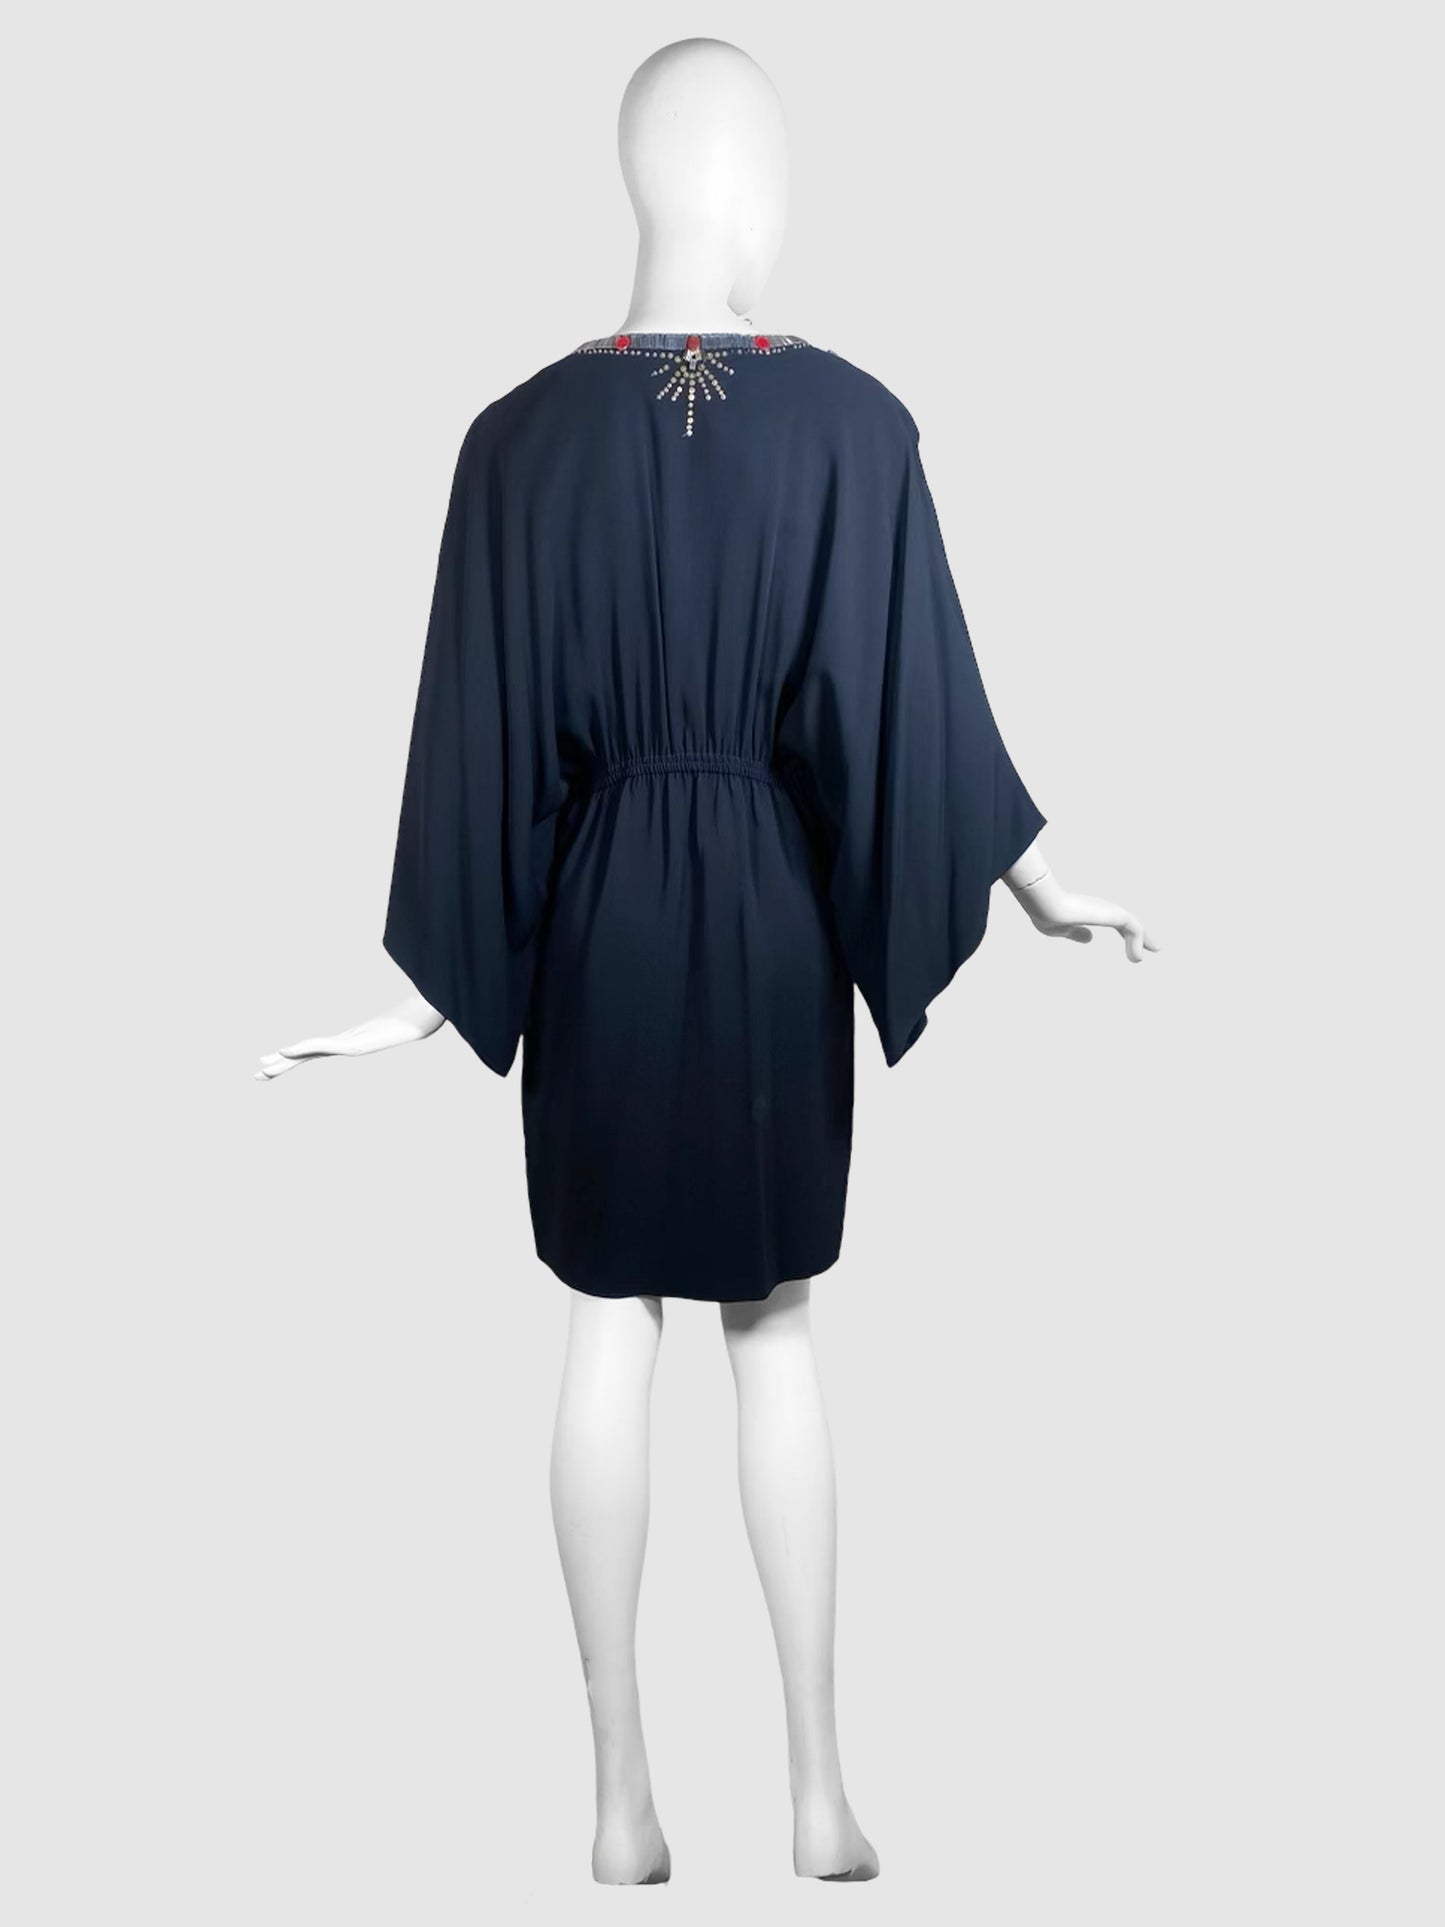 Emilio Pucci Beaded Black Dress - Size S/M